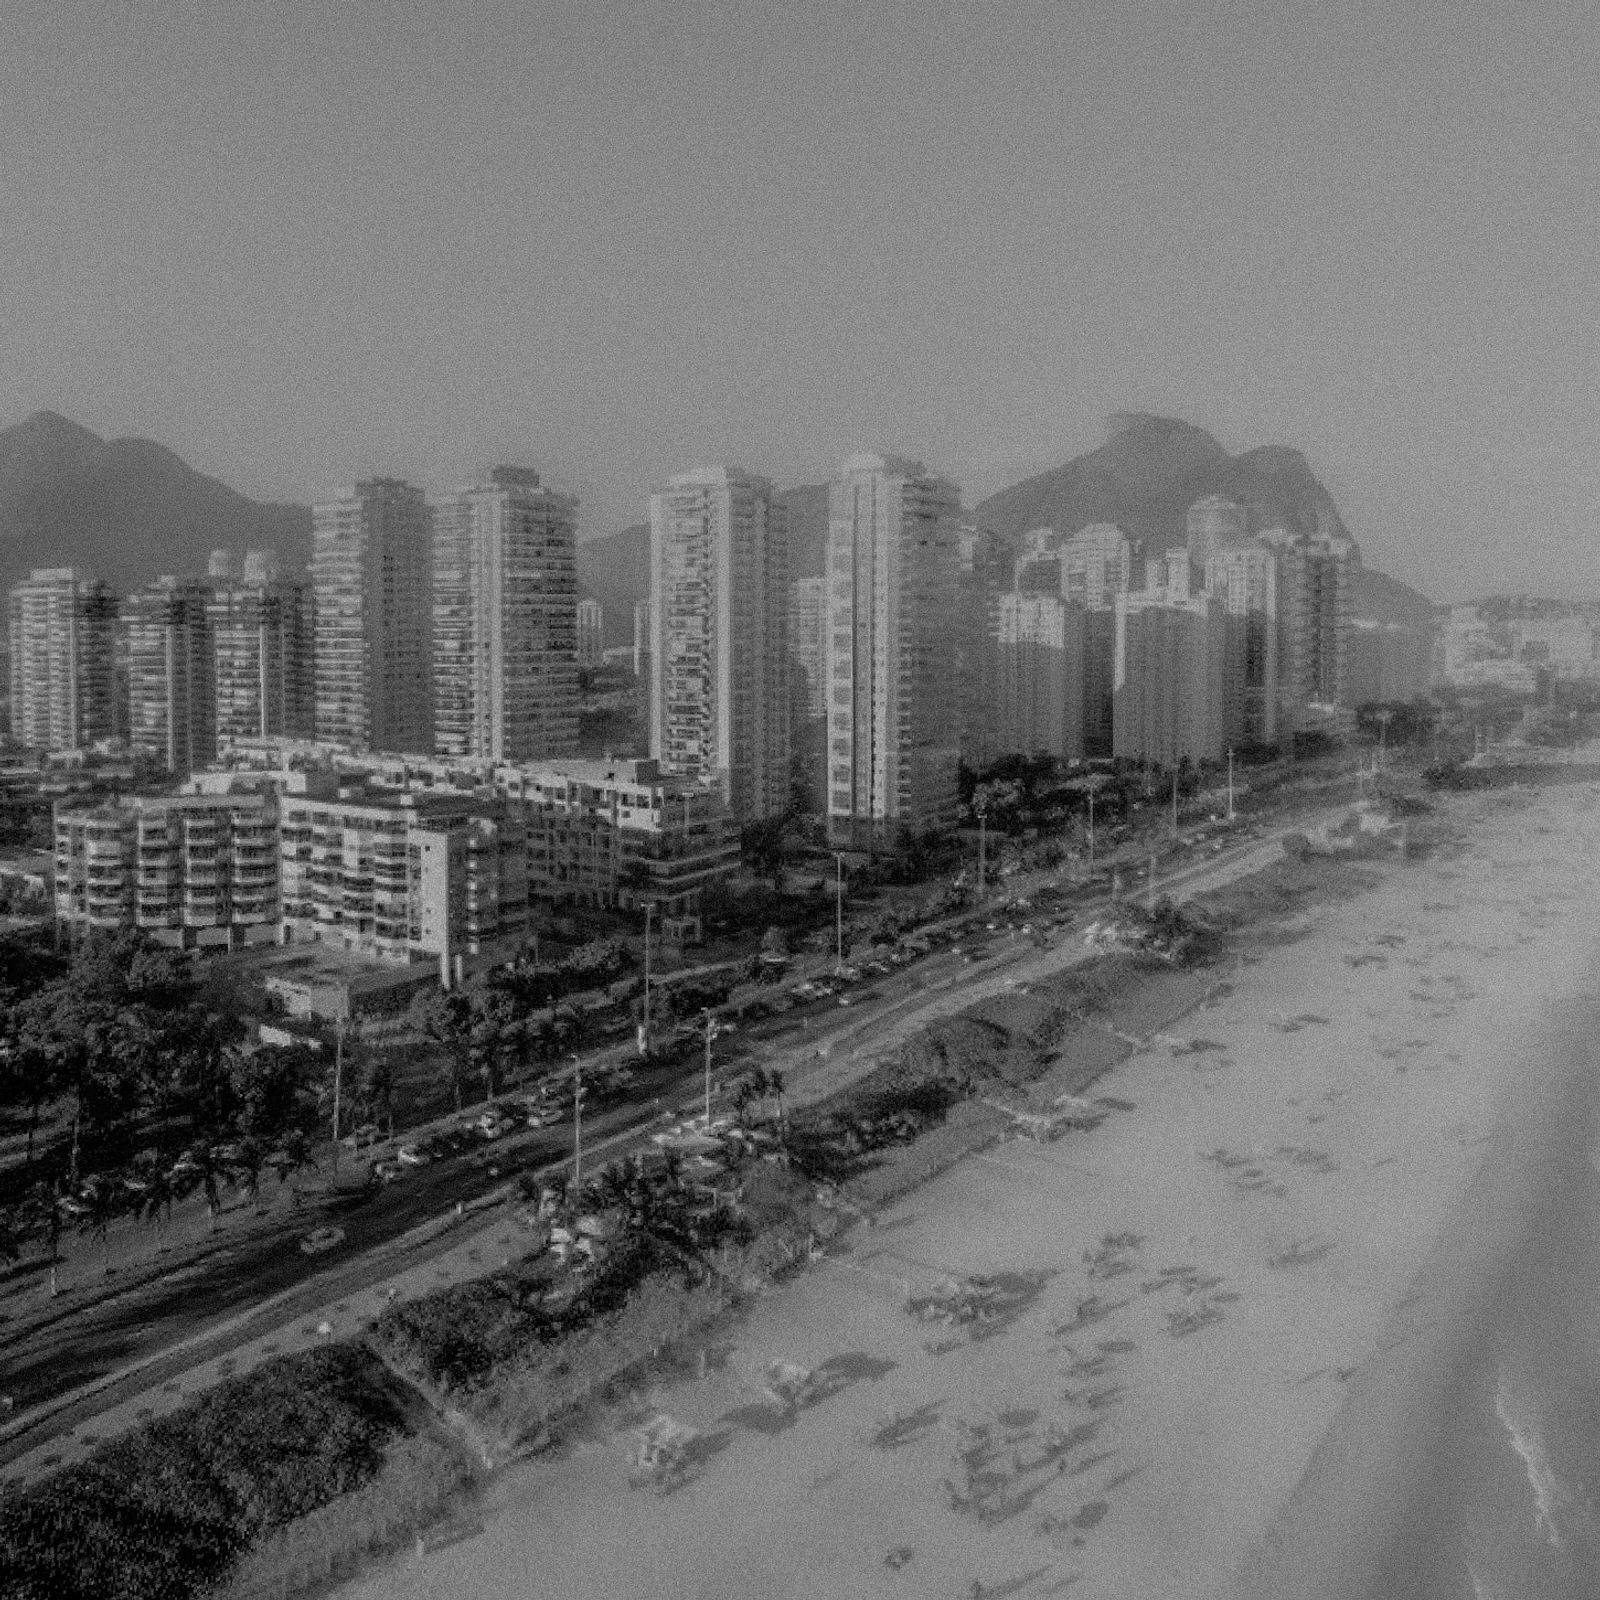 © Benjamin Pfau - Image from the Cidade Maravilhosa photography project